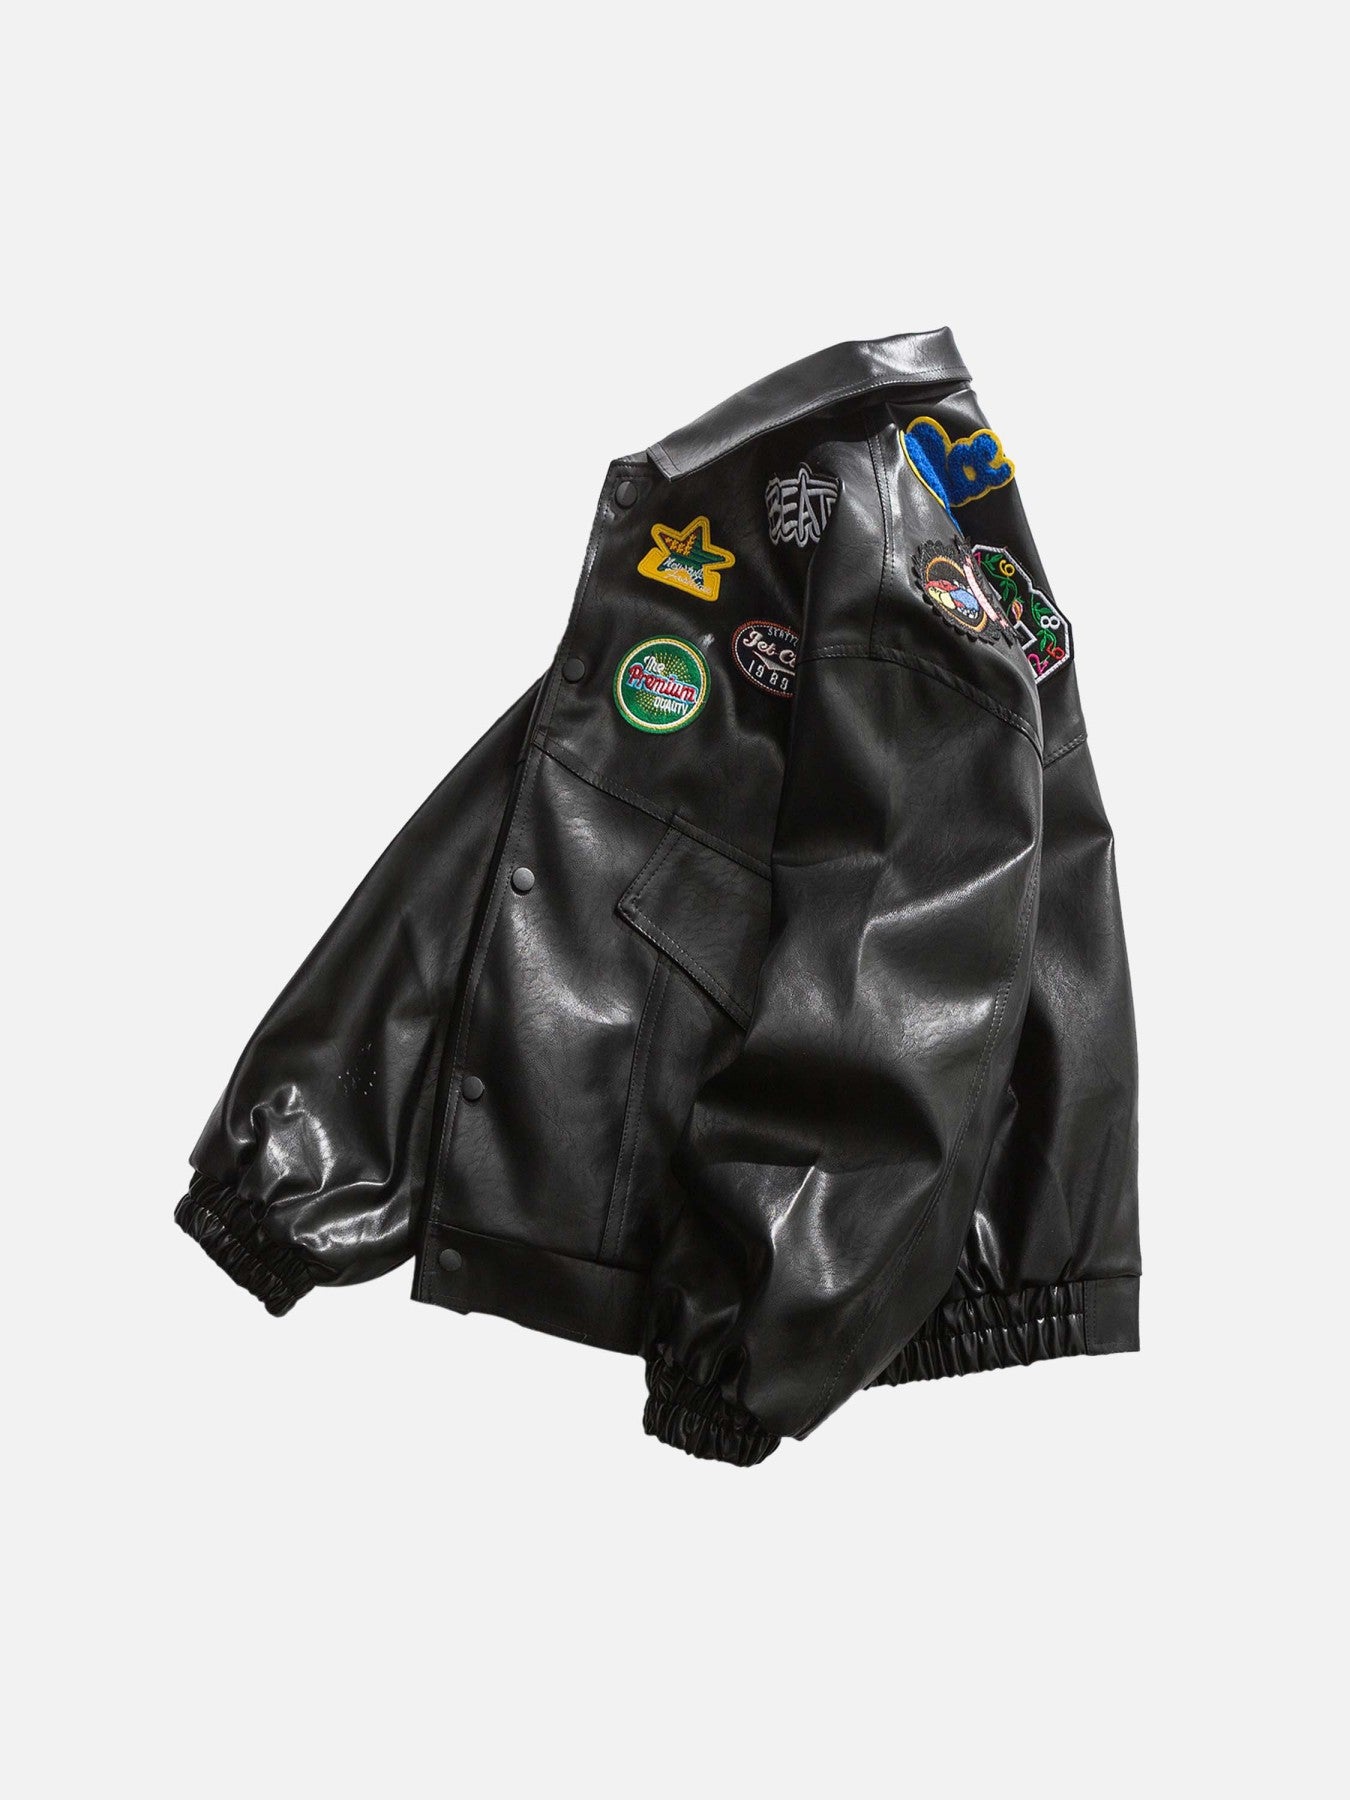 The Supermade Retro Street Biker Jacket